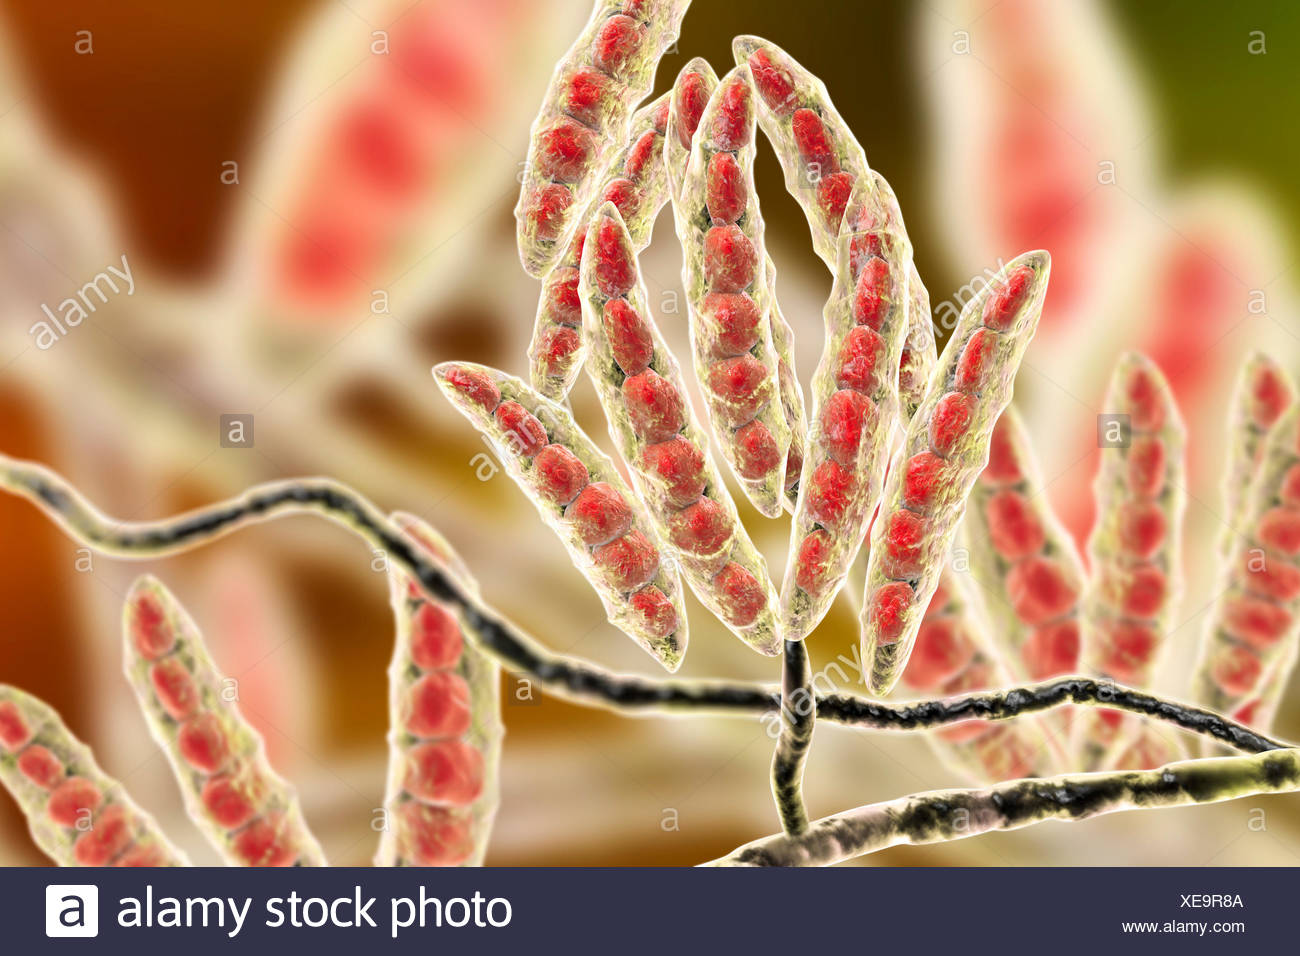 Computer illustration of conidia (asexual spores) from a Fusarium sp